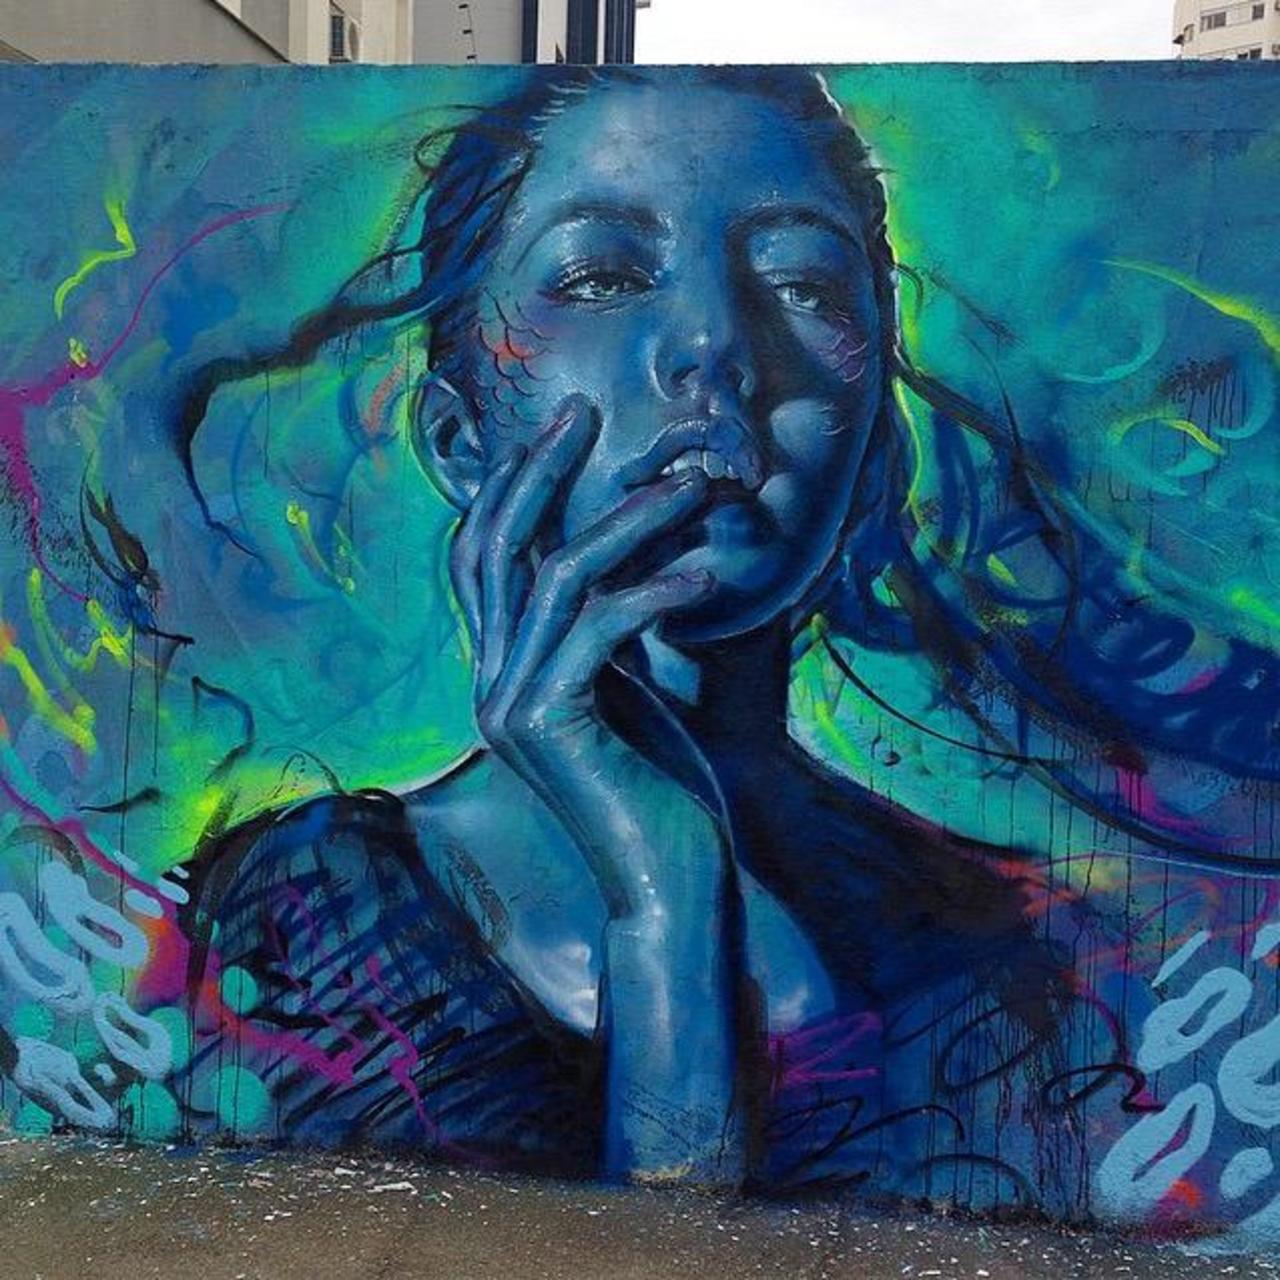 Thiago Valdi new Street Art piece titled 'Day Dreamer'

#art #mural #graffiti #streetart http://t.co/xFeTQzjFq5